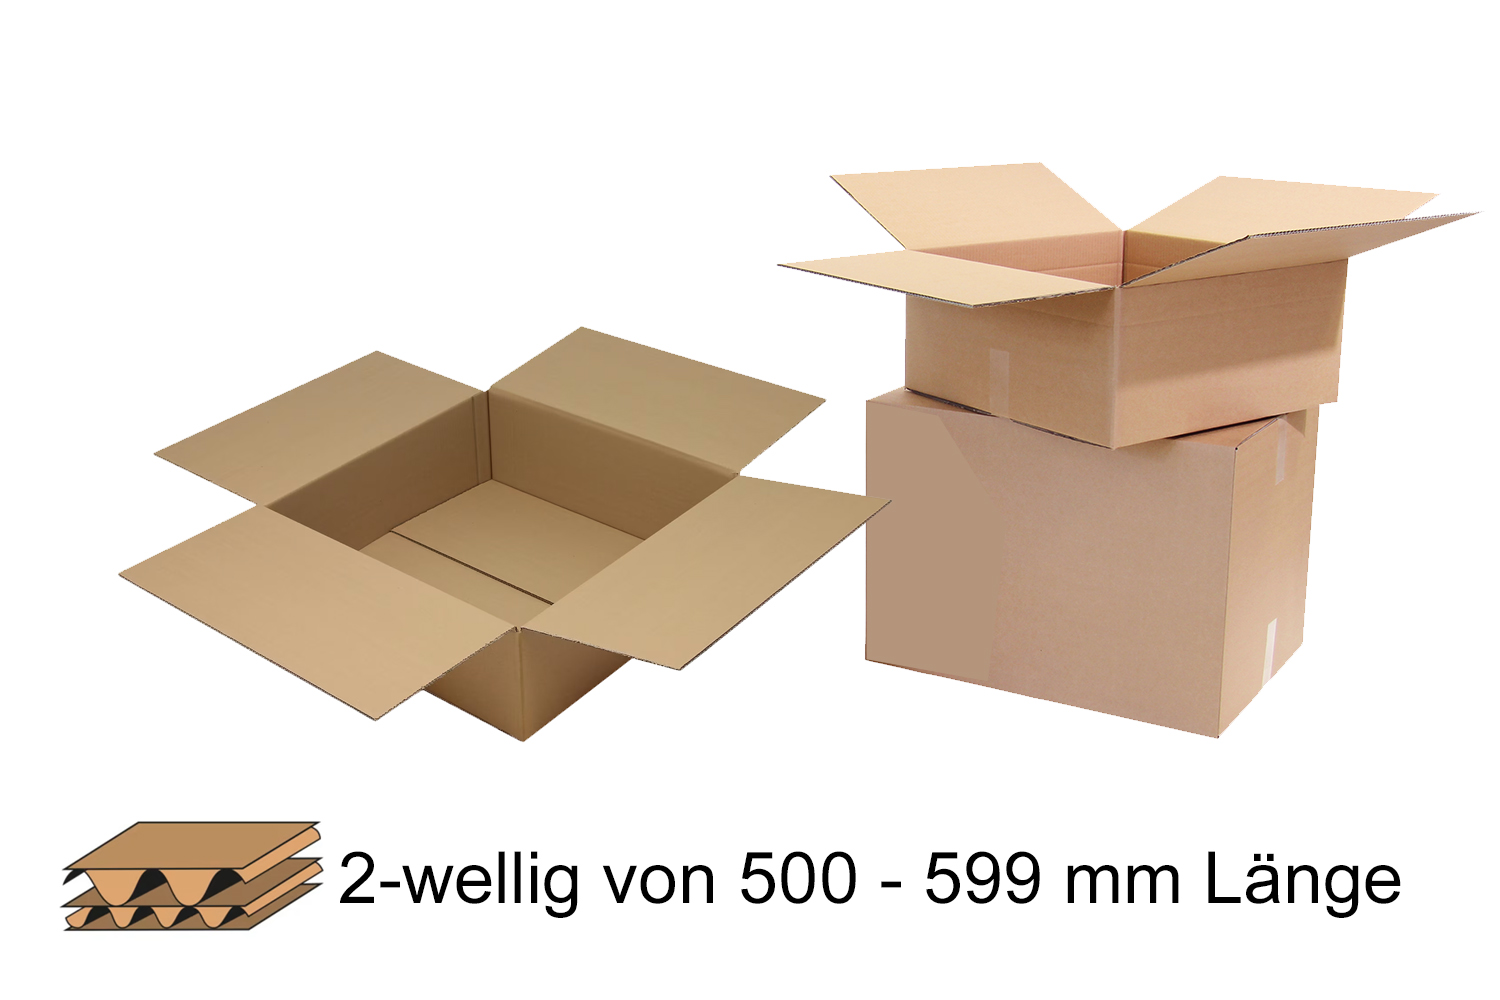 Wellpapp-Faltkarton 2-wellig 500 - 599 mm Länge